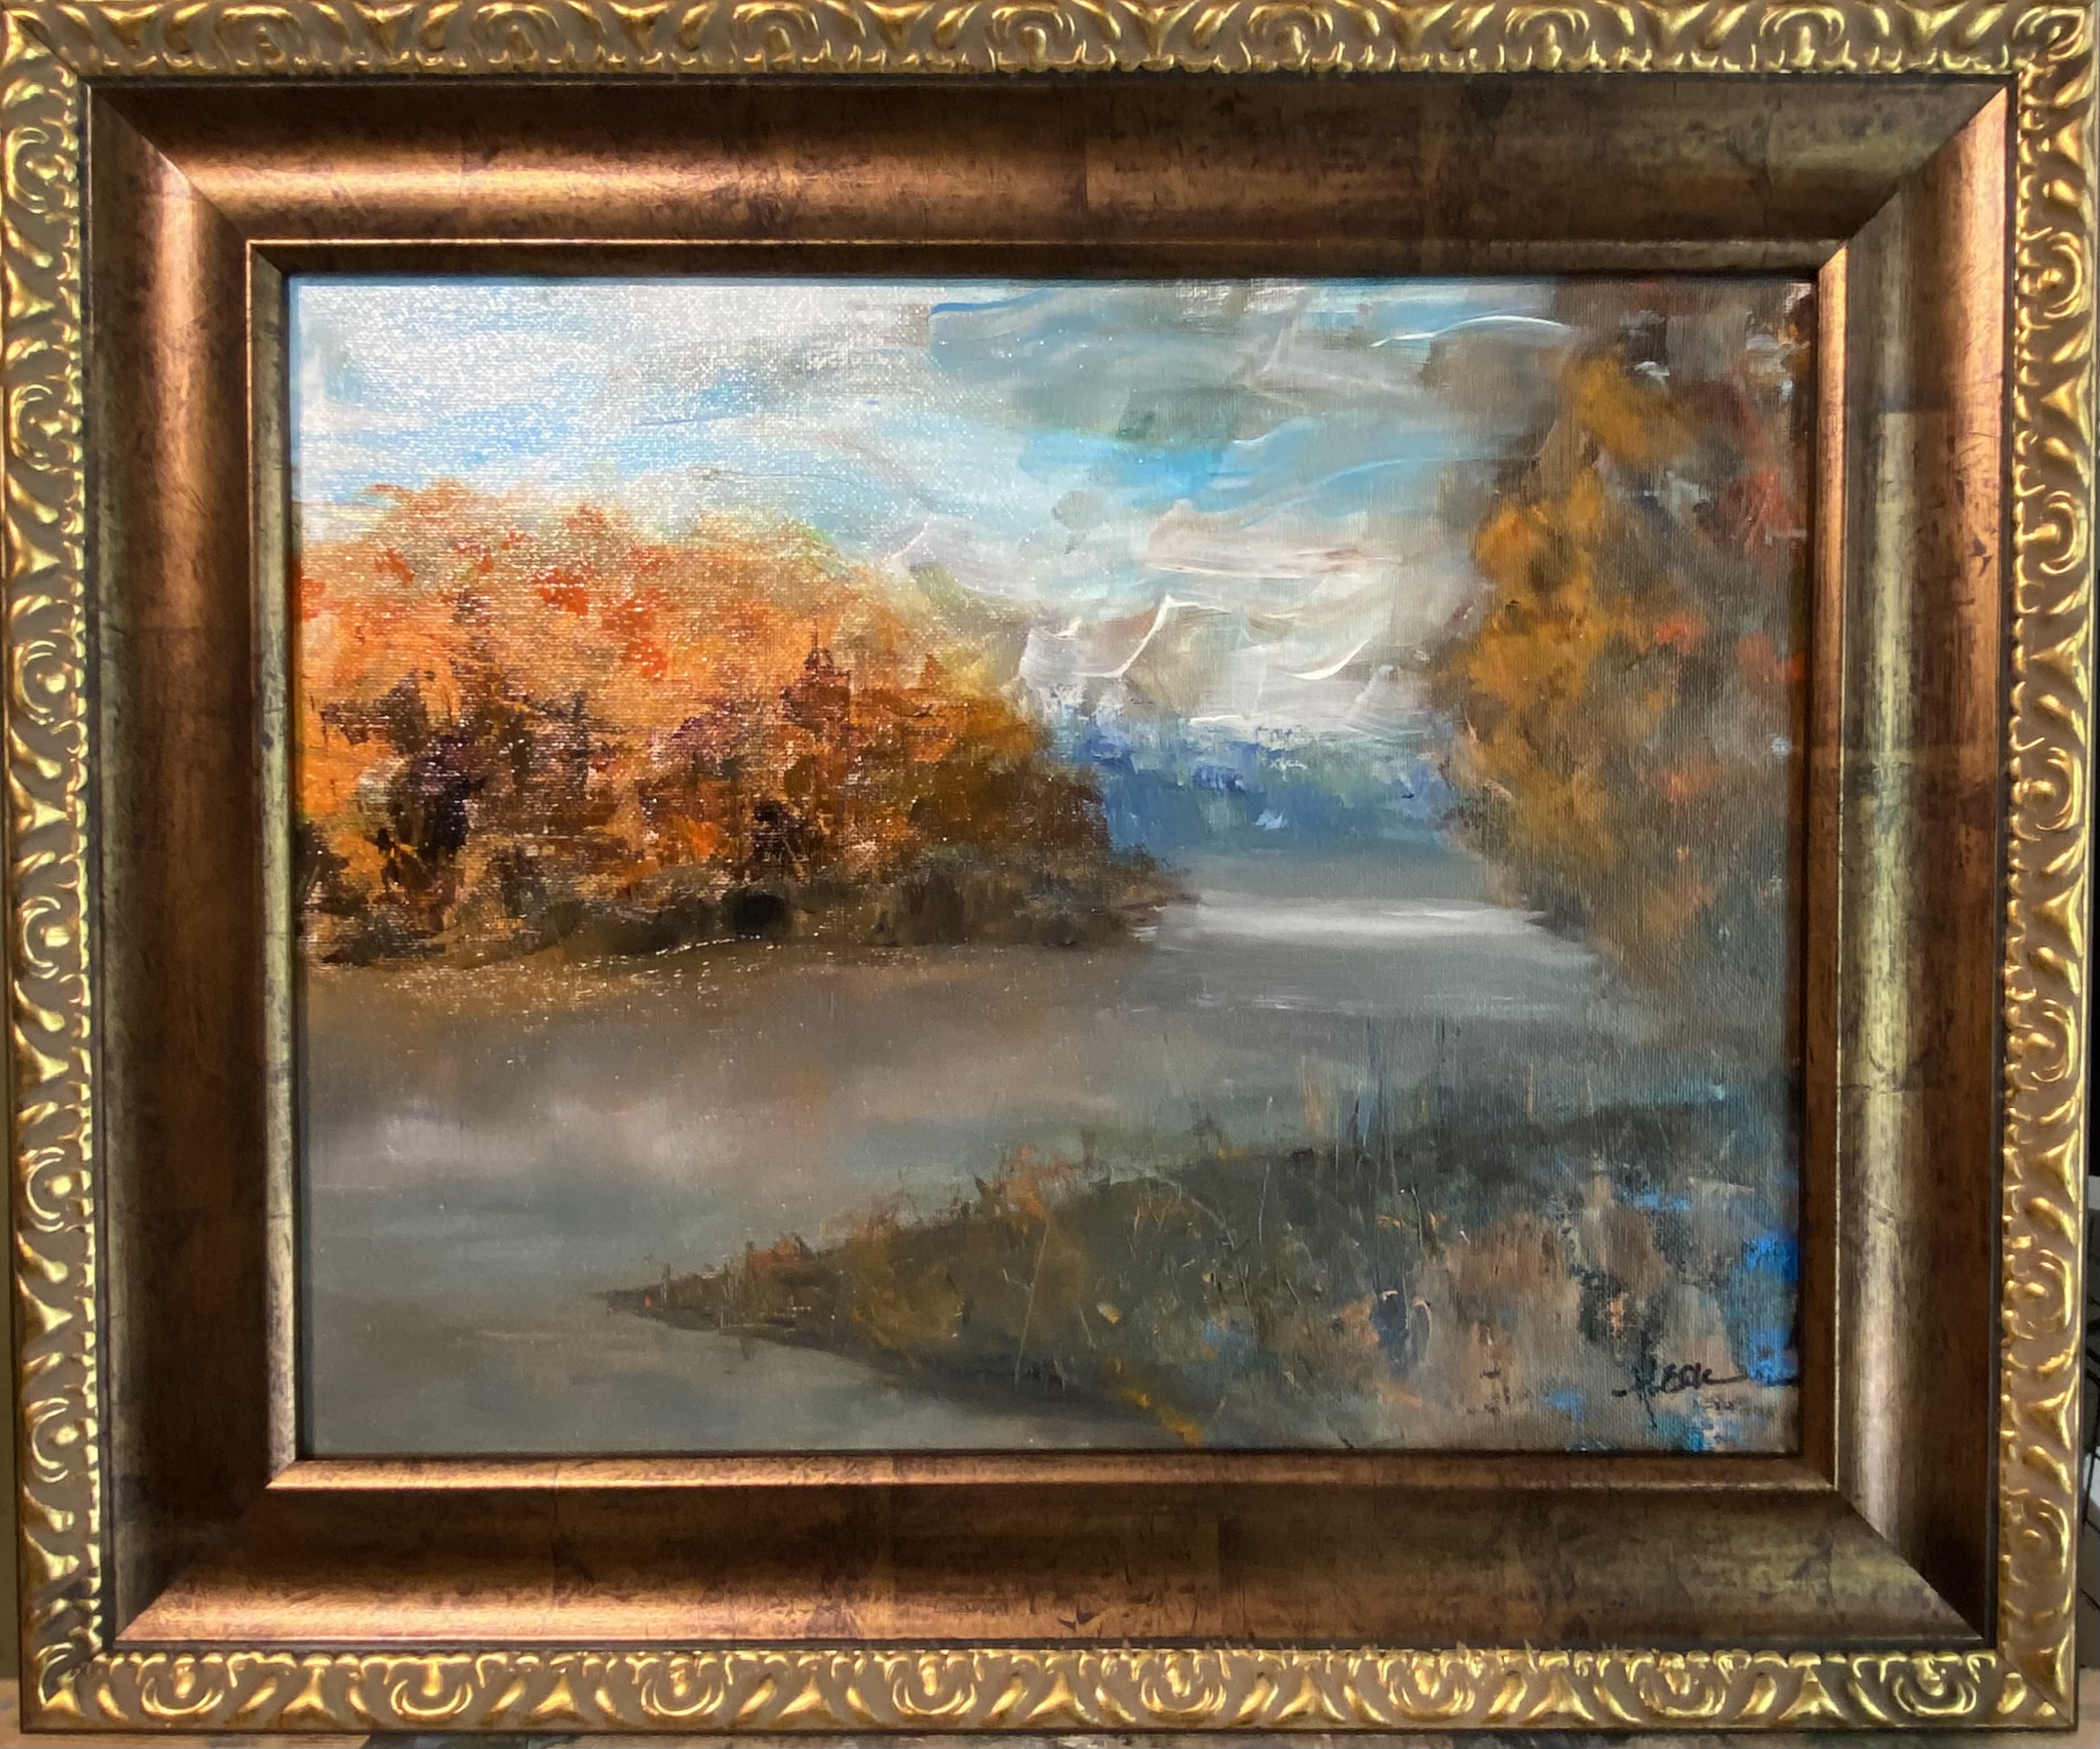 279 - Fall Color - 11x14 - Landscape - $175